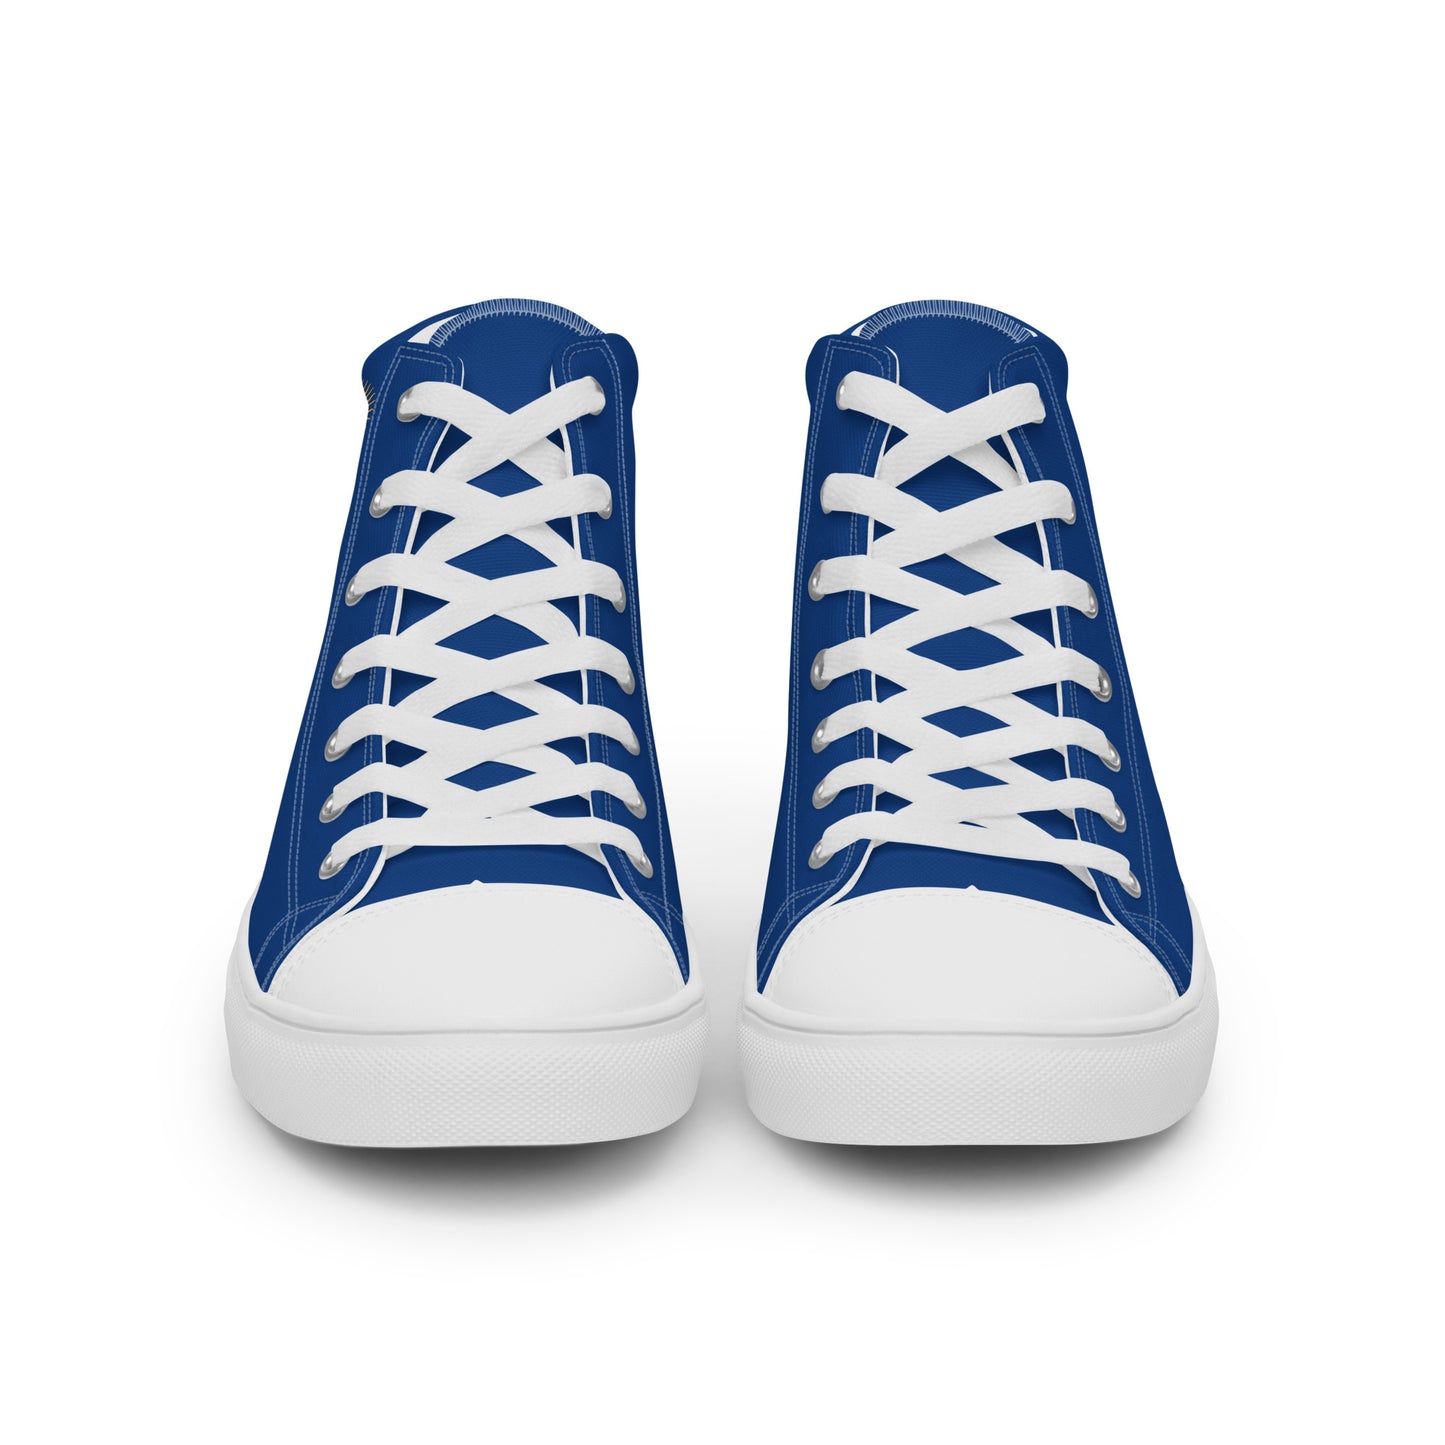 Argentina - Men - Blue - High top shoes